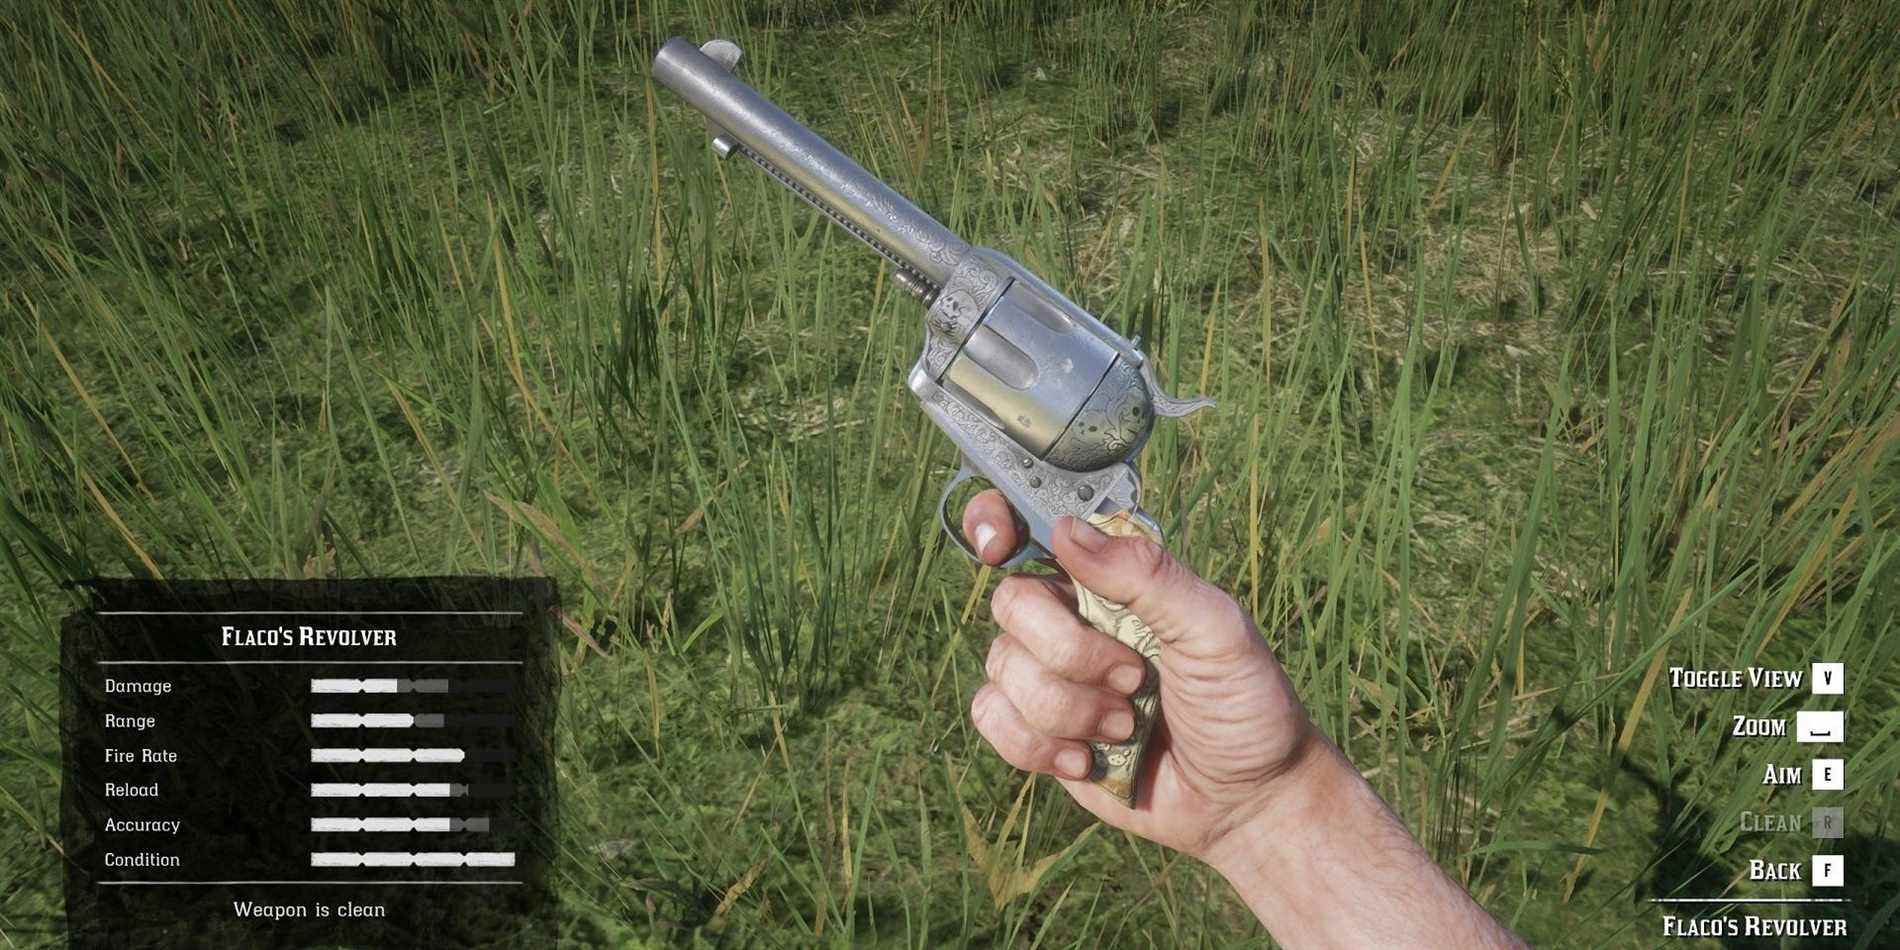 Le revolver de Flaco dans Red Dead Redemption 2